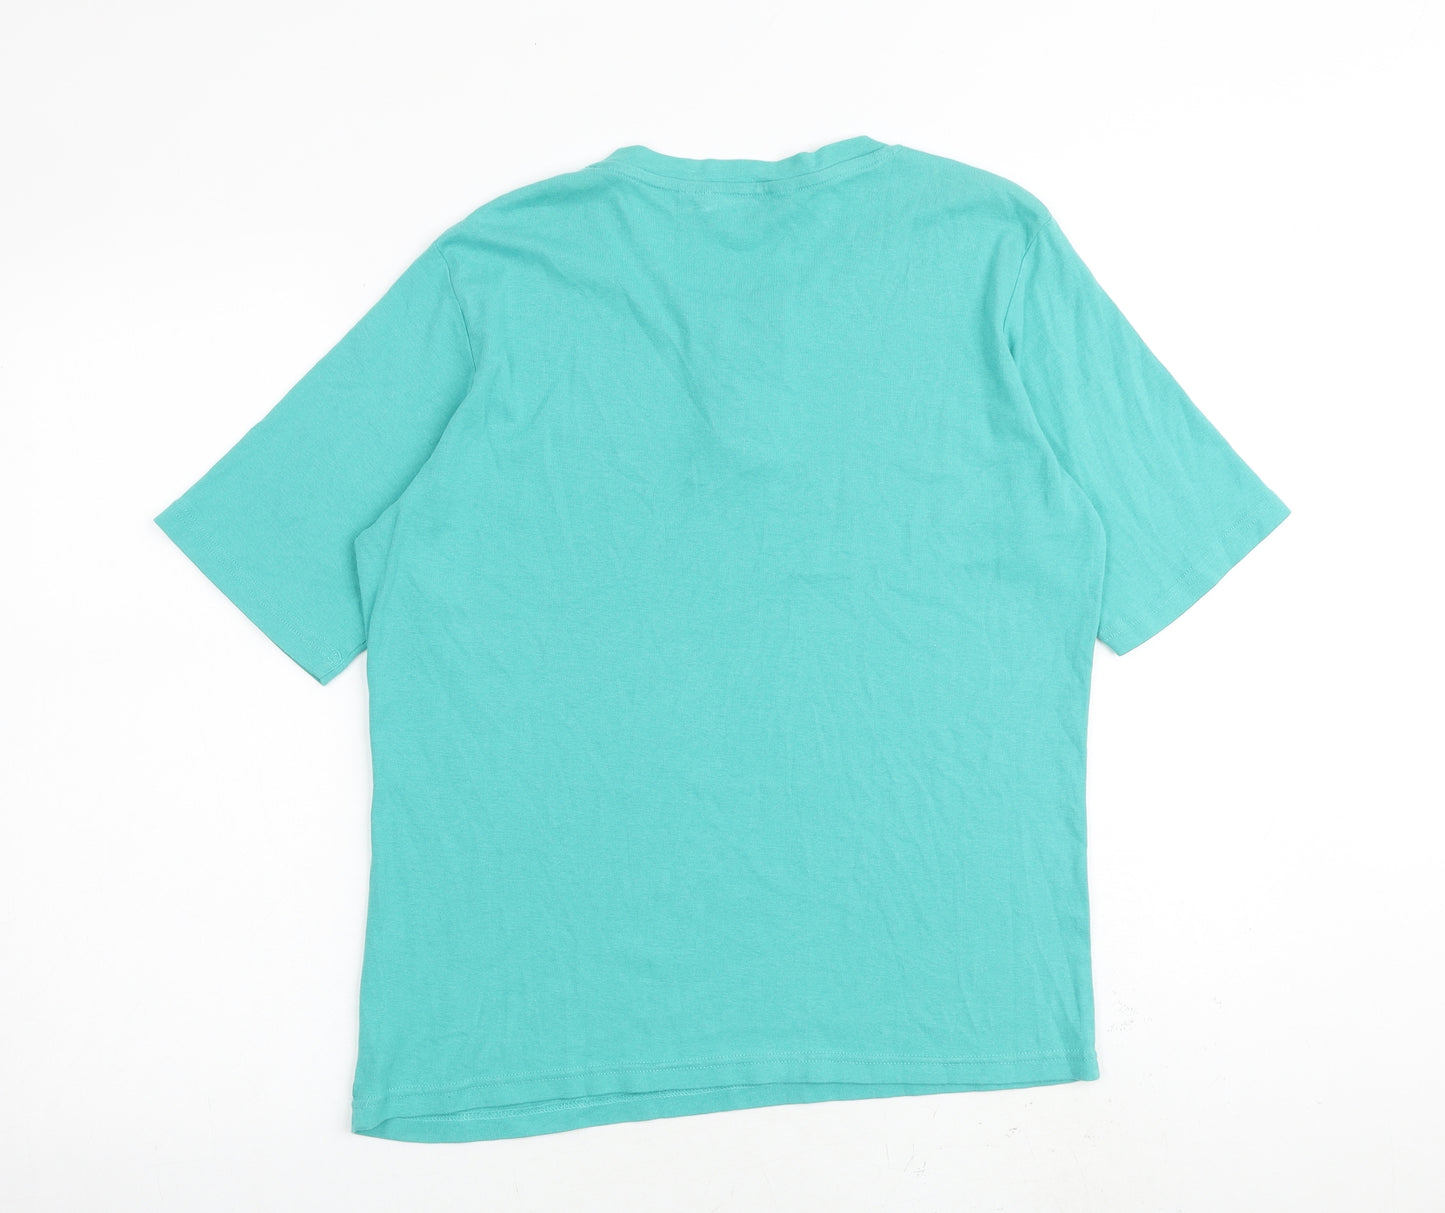 EWM Womens Green 100% Cotton Basic T-Shirt Size 18 Round Neck - Size 18-20